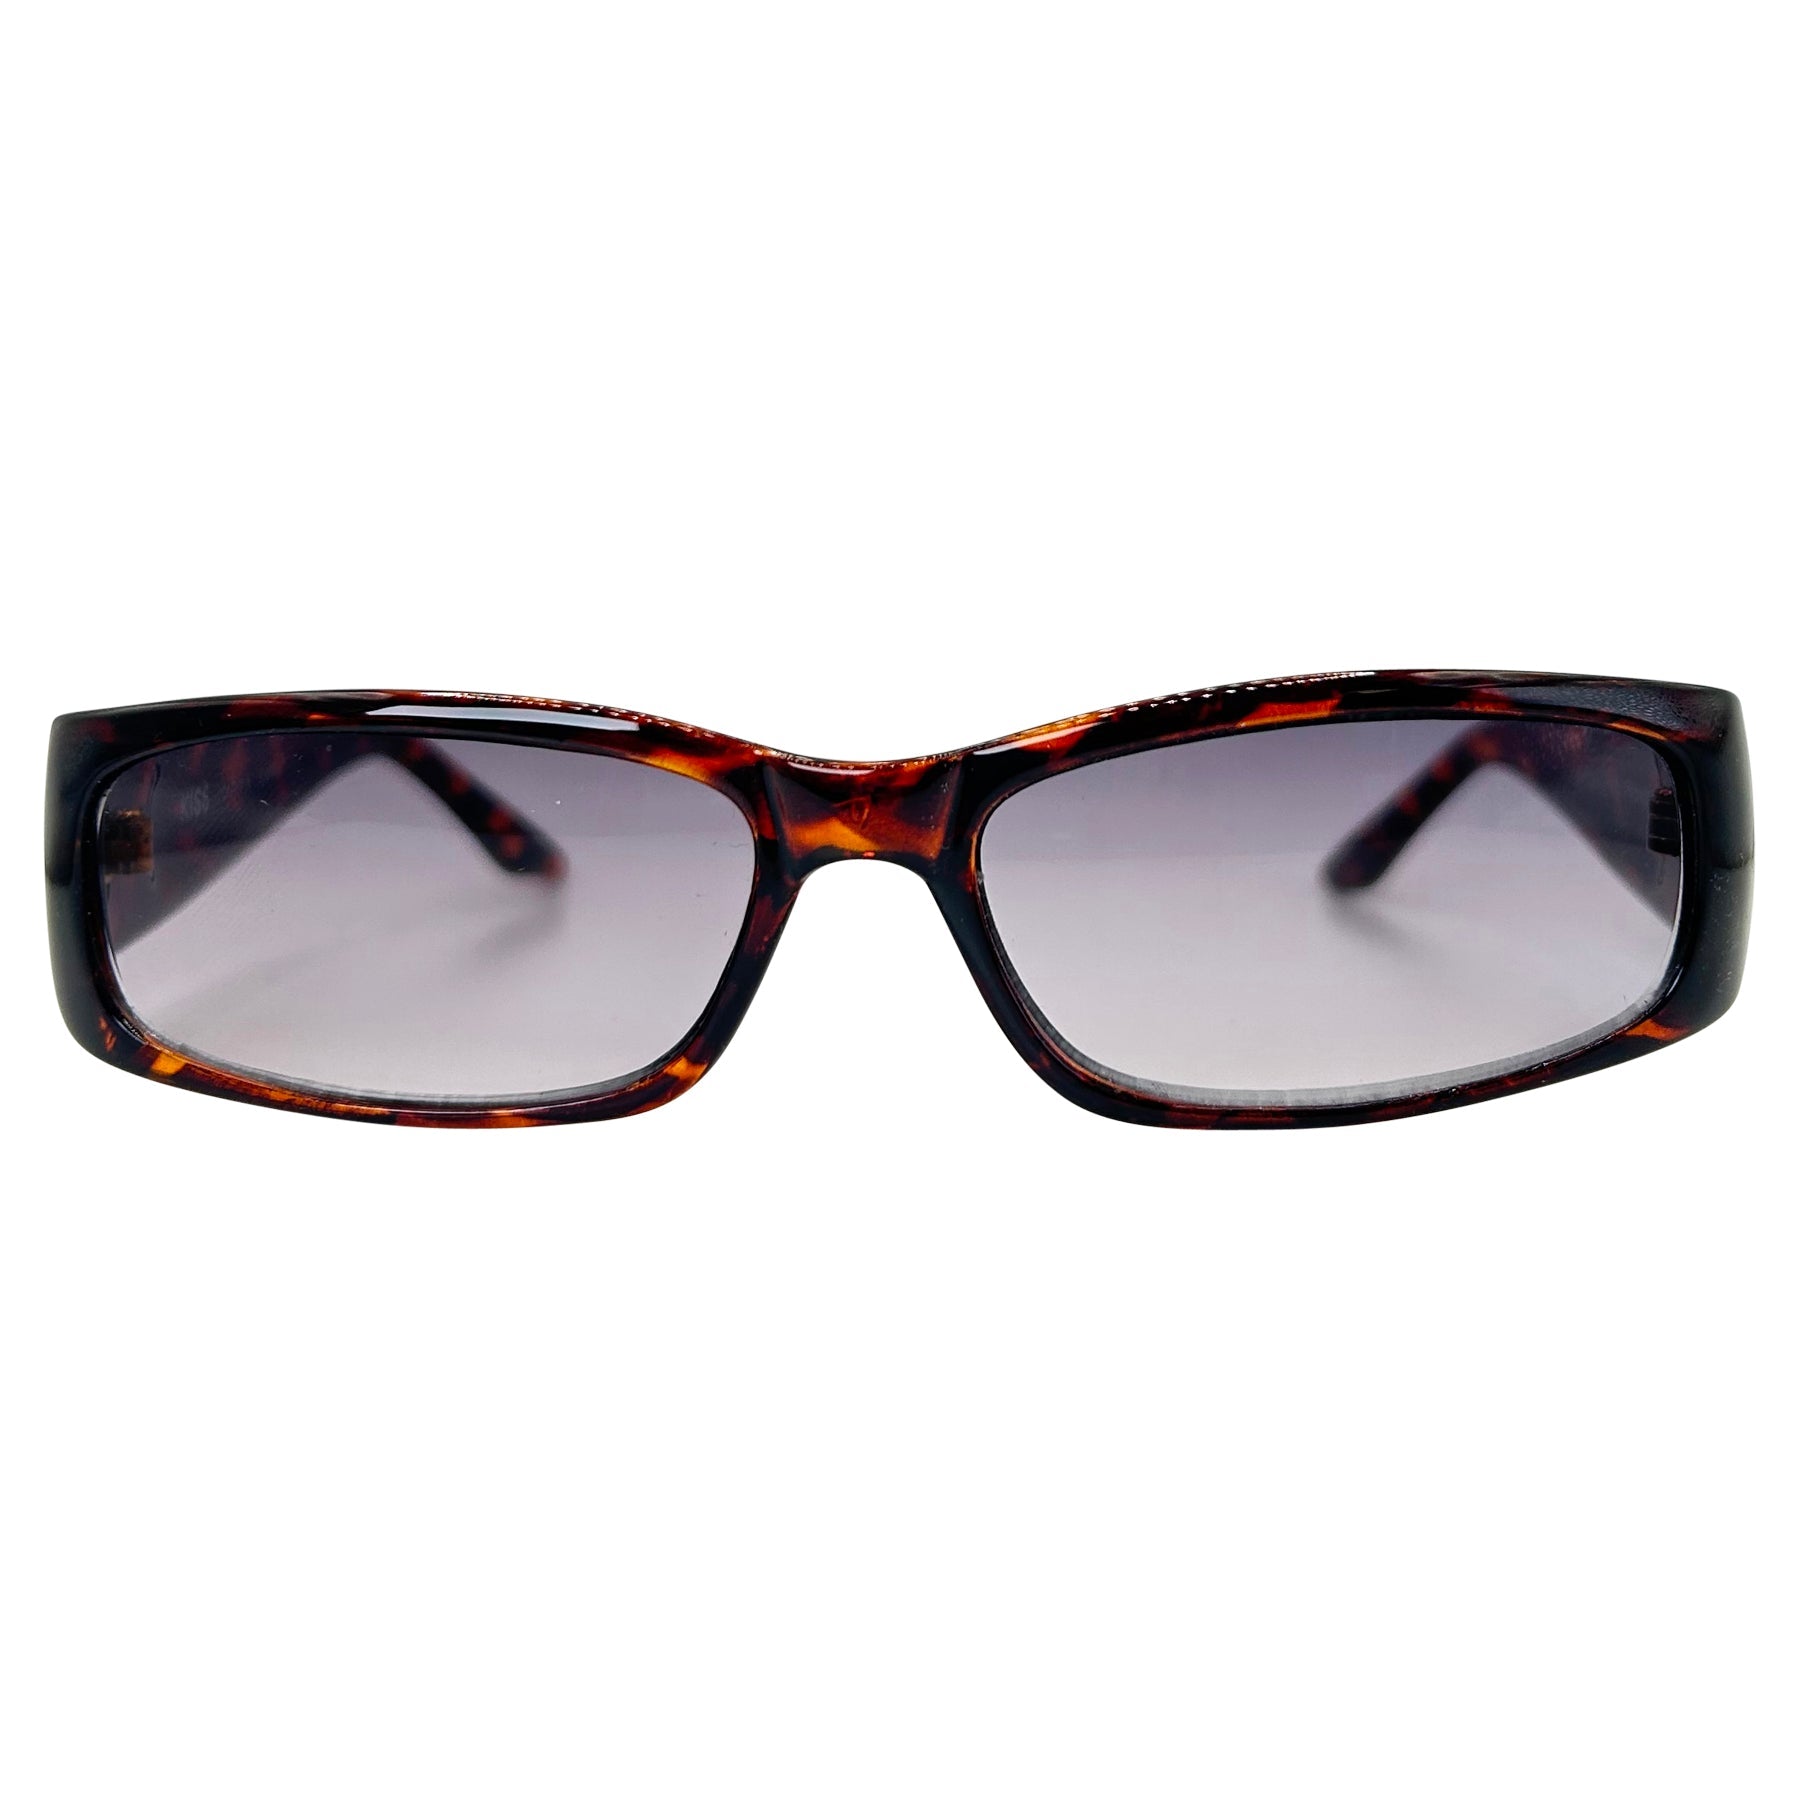 PINDROP Square 90s Sunglasses